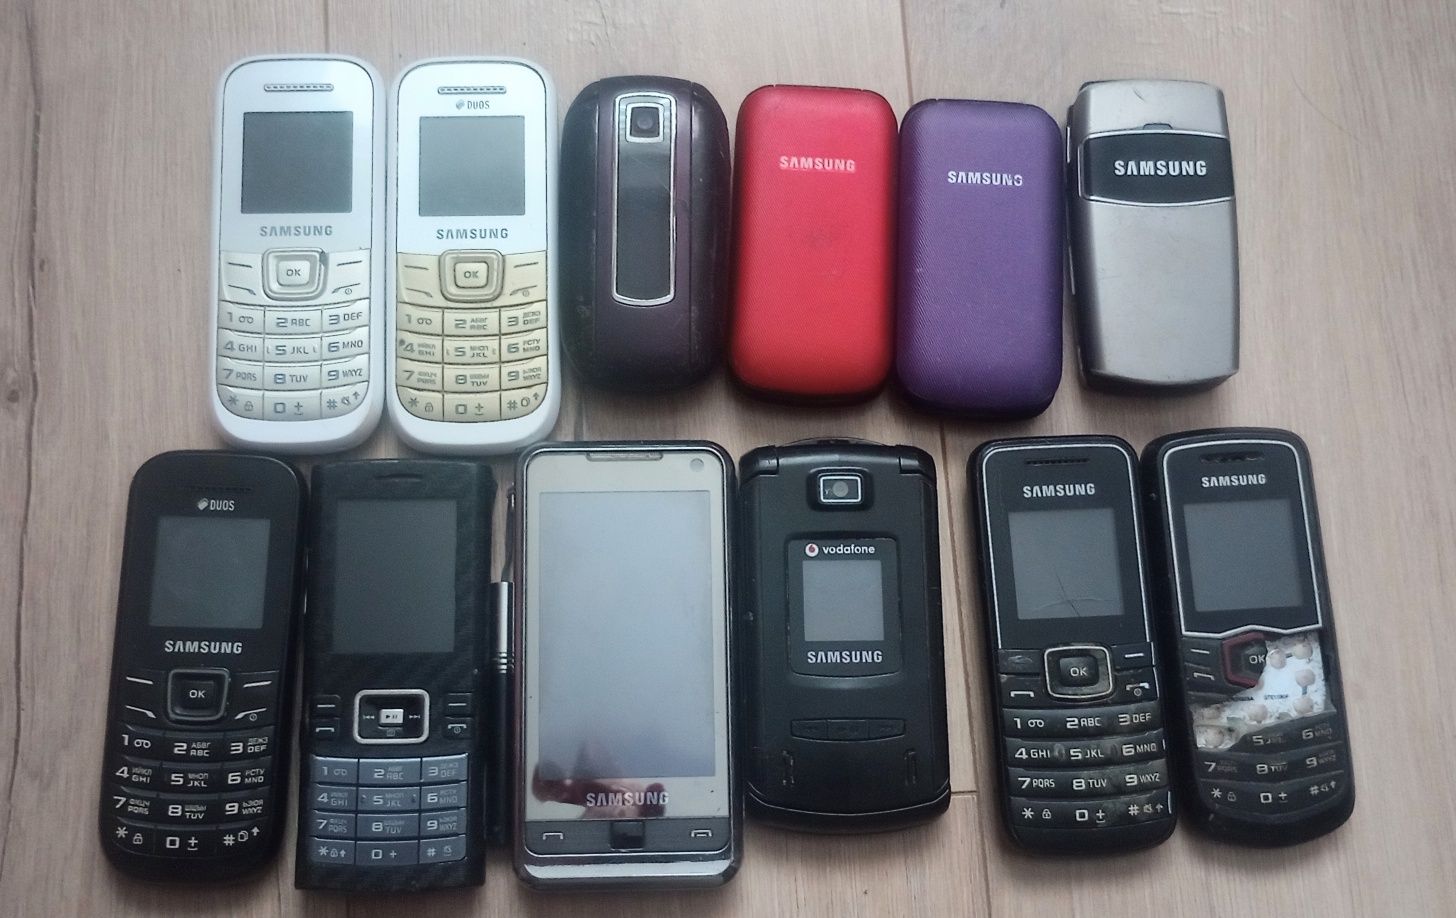 Samsung, Sony Ericsson